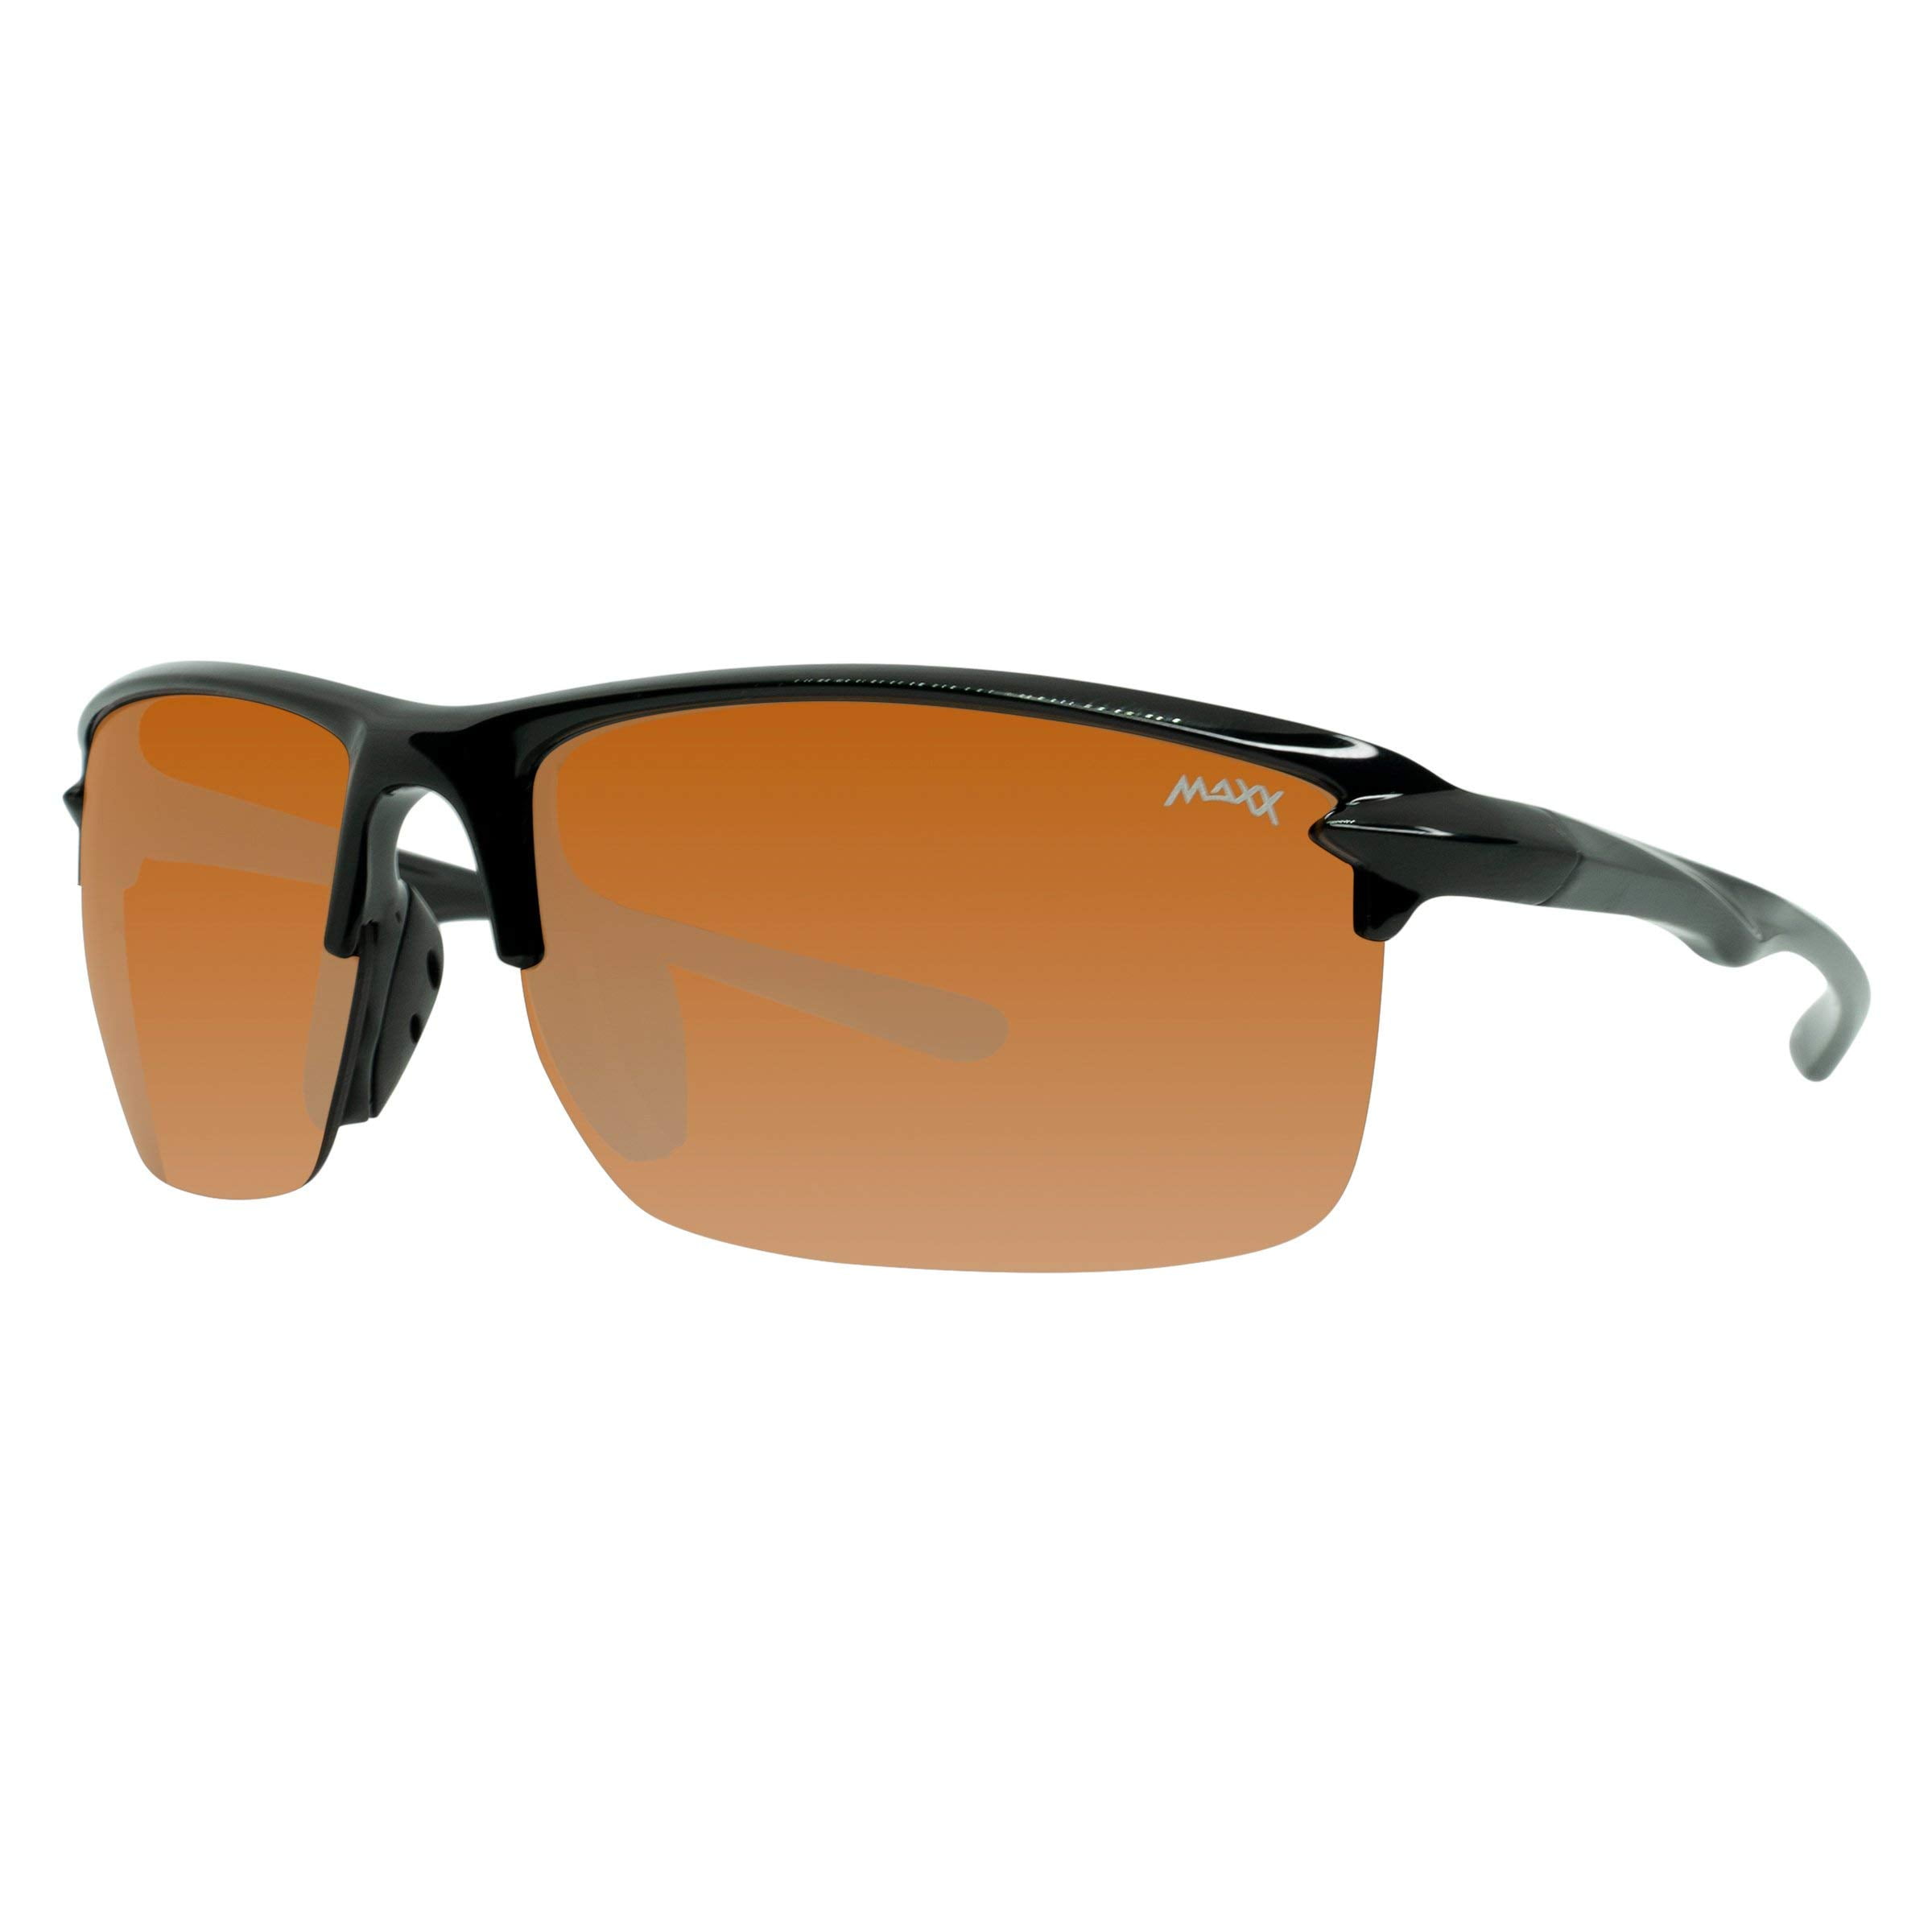 Maxx HD Sunglasses mirrored black driving gold vision #7 shatterproof 7 